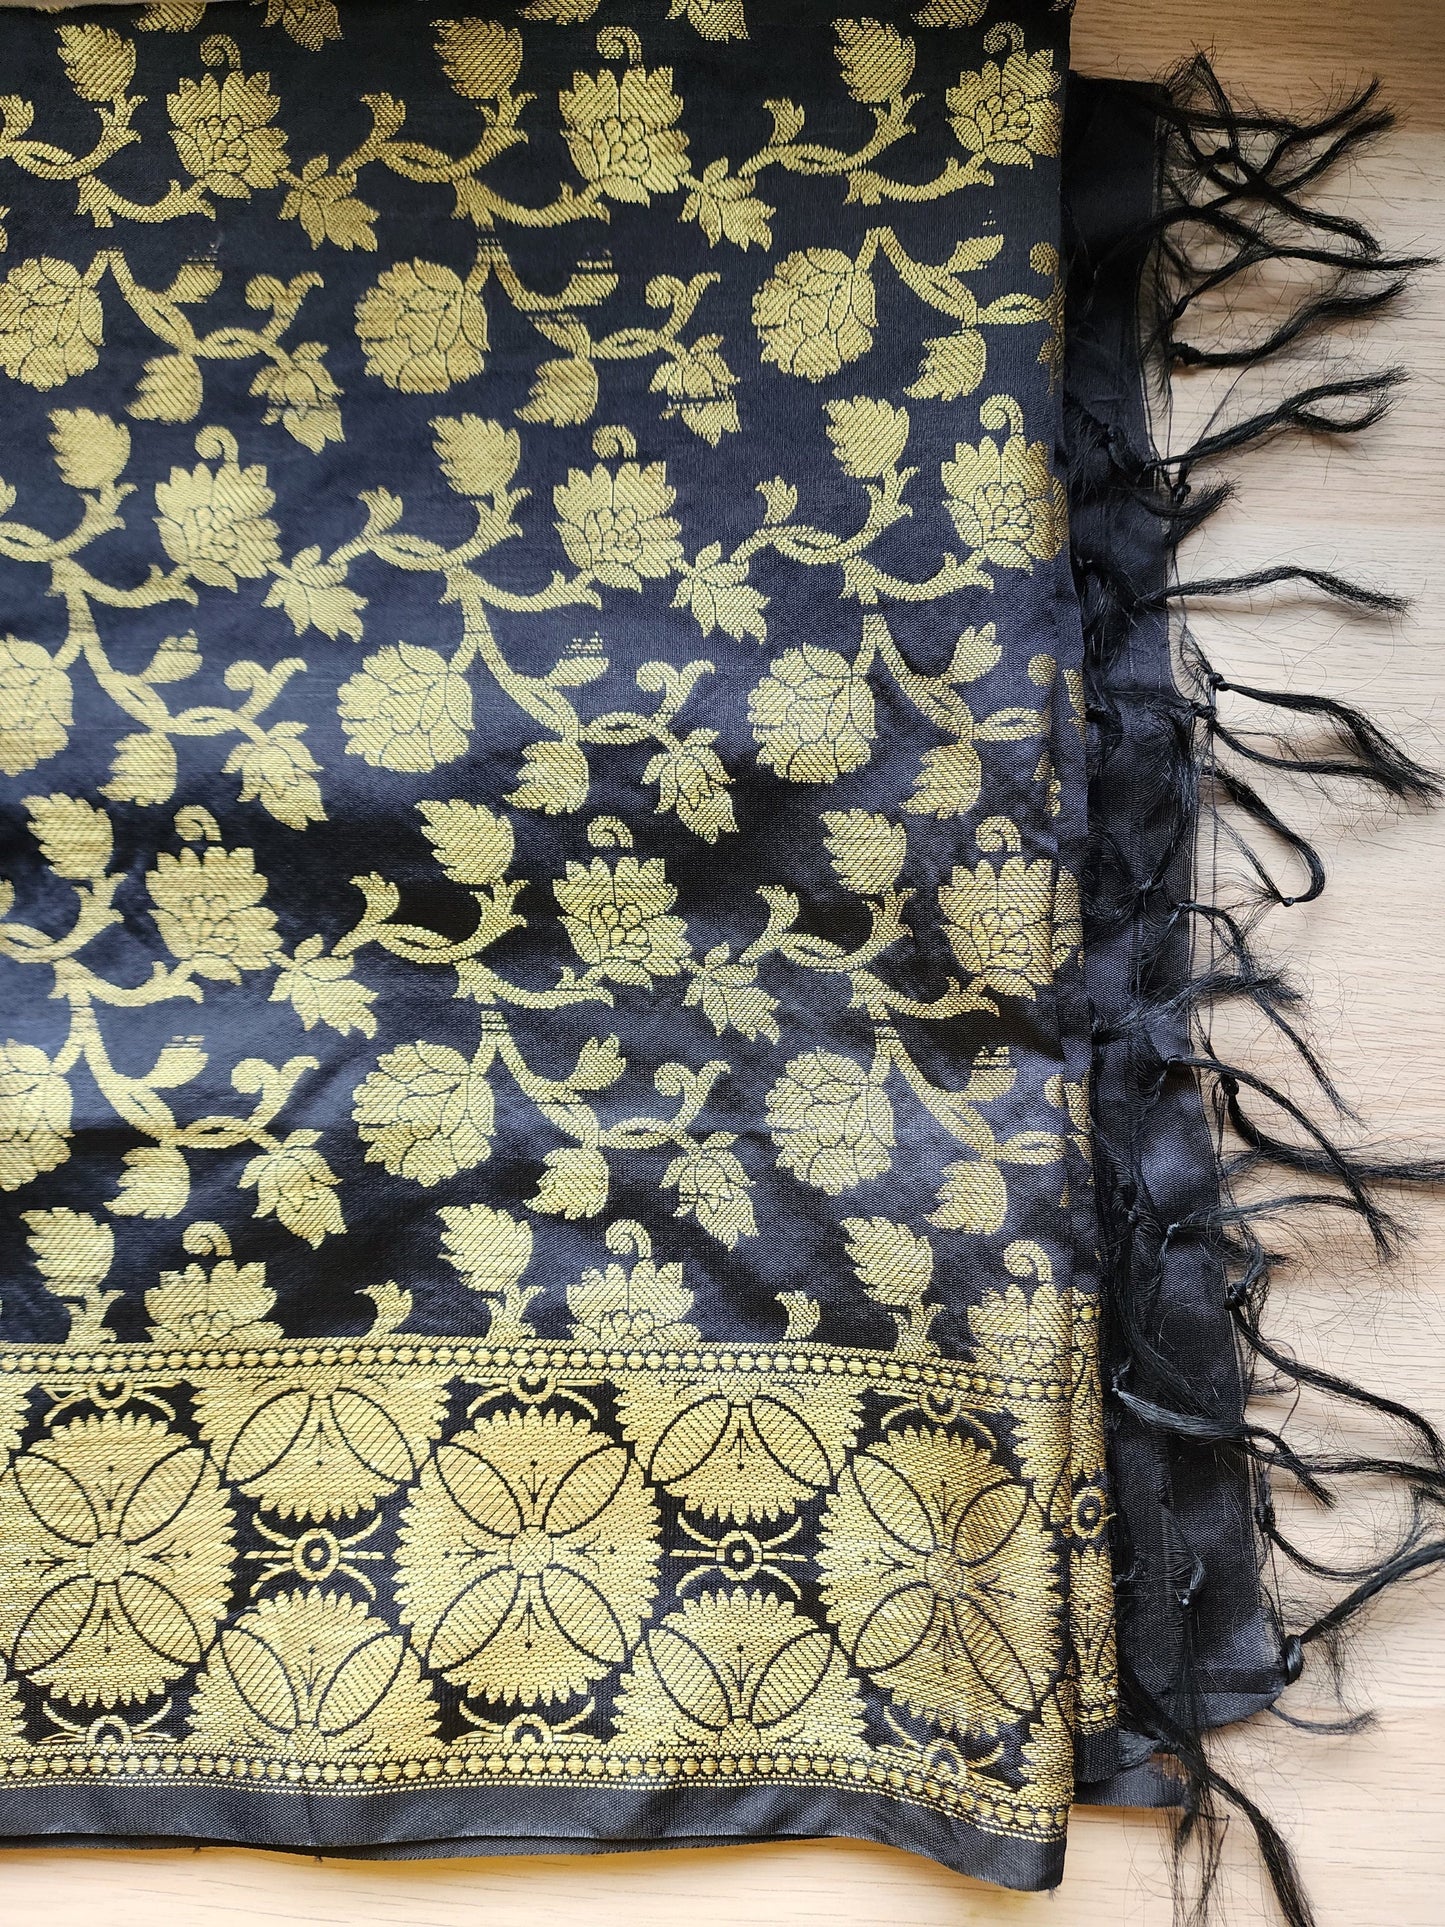 Banarasi Black Dupatta with gold handweaving, Indian traditional and Festive designer dupatta, luxurious, soft to touch dupatta